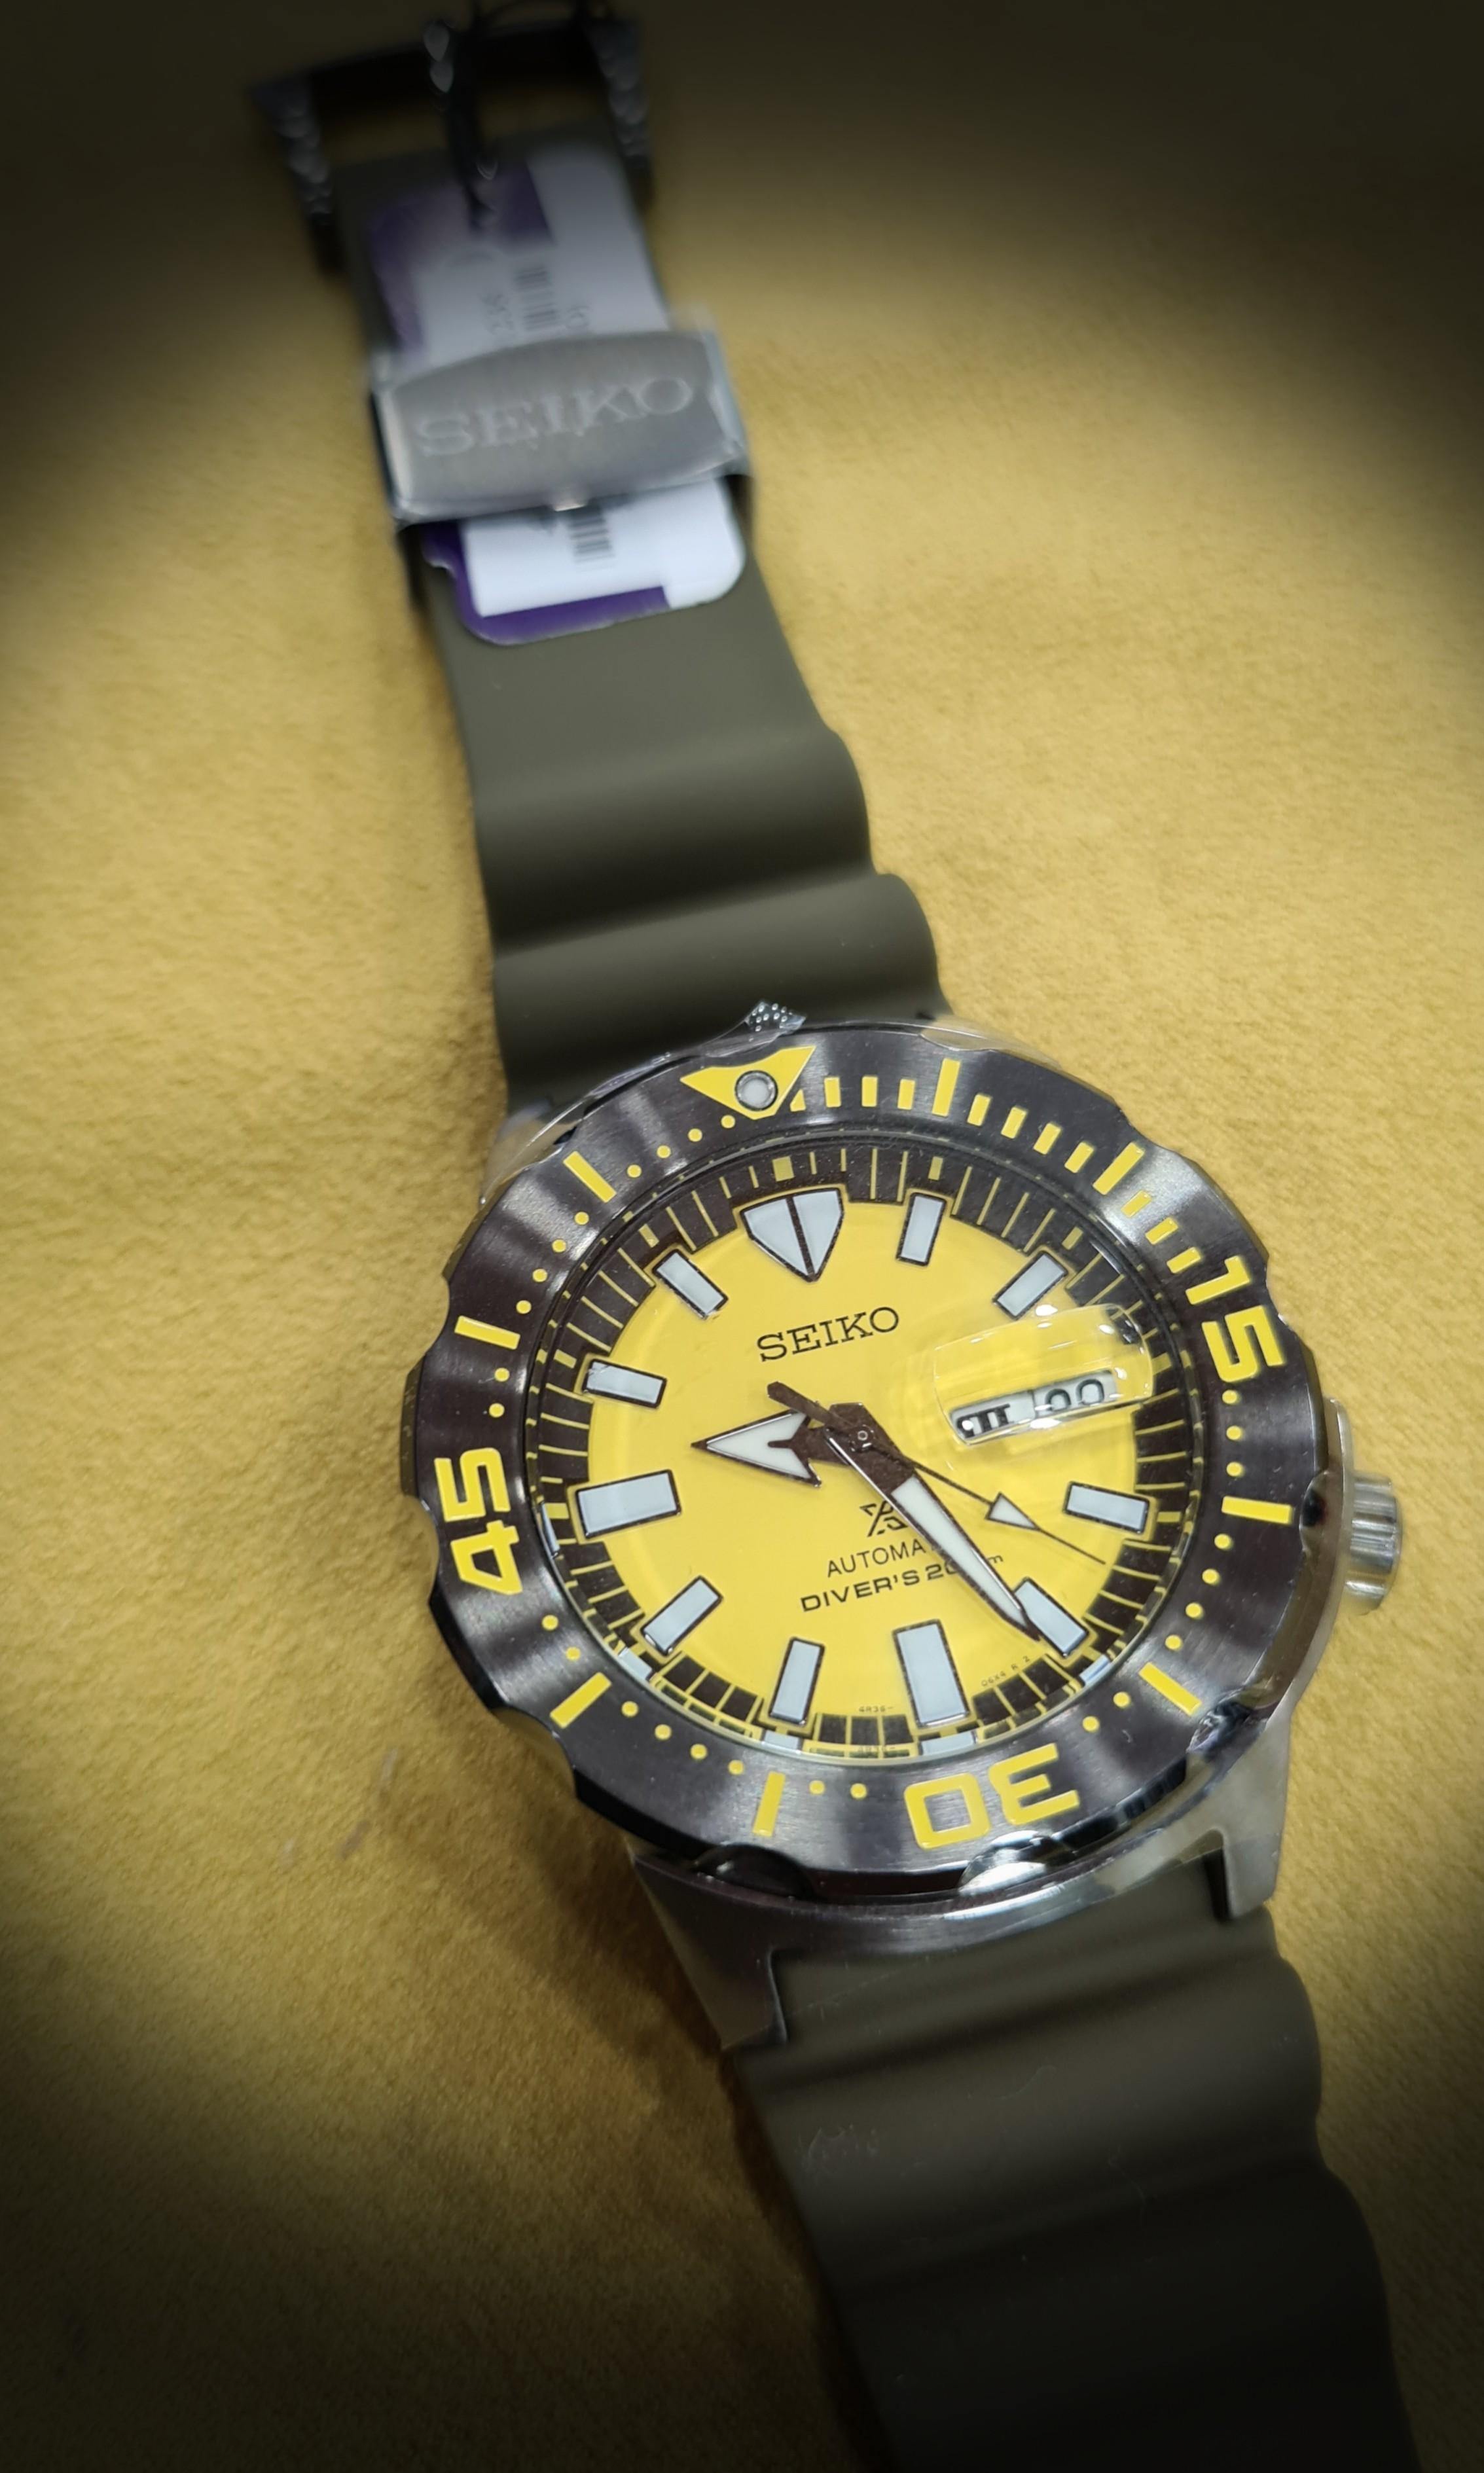 Seiko Monster Asia Special Edition Gen 4 Diver's 200M Men's Watch SRPF35K1 - Prestige